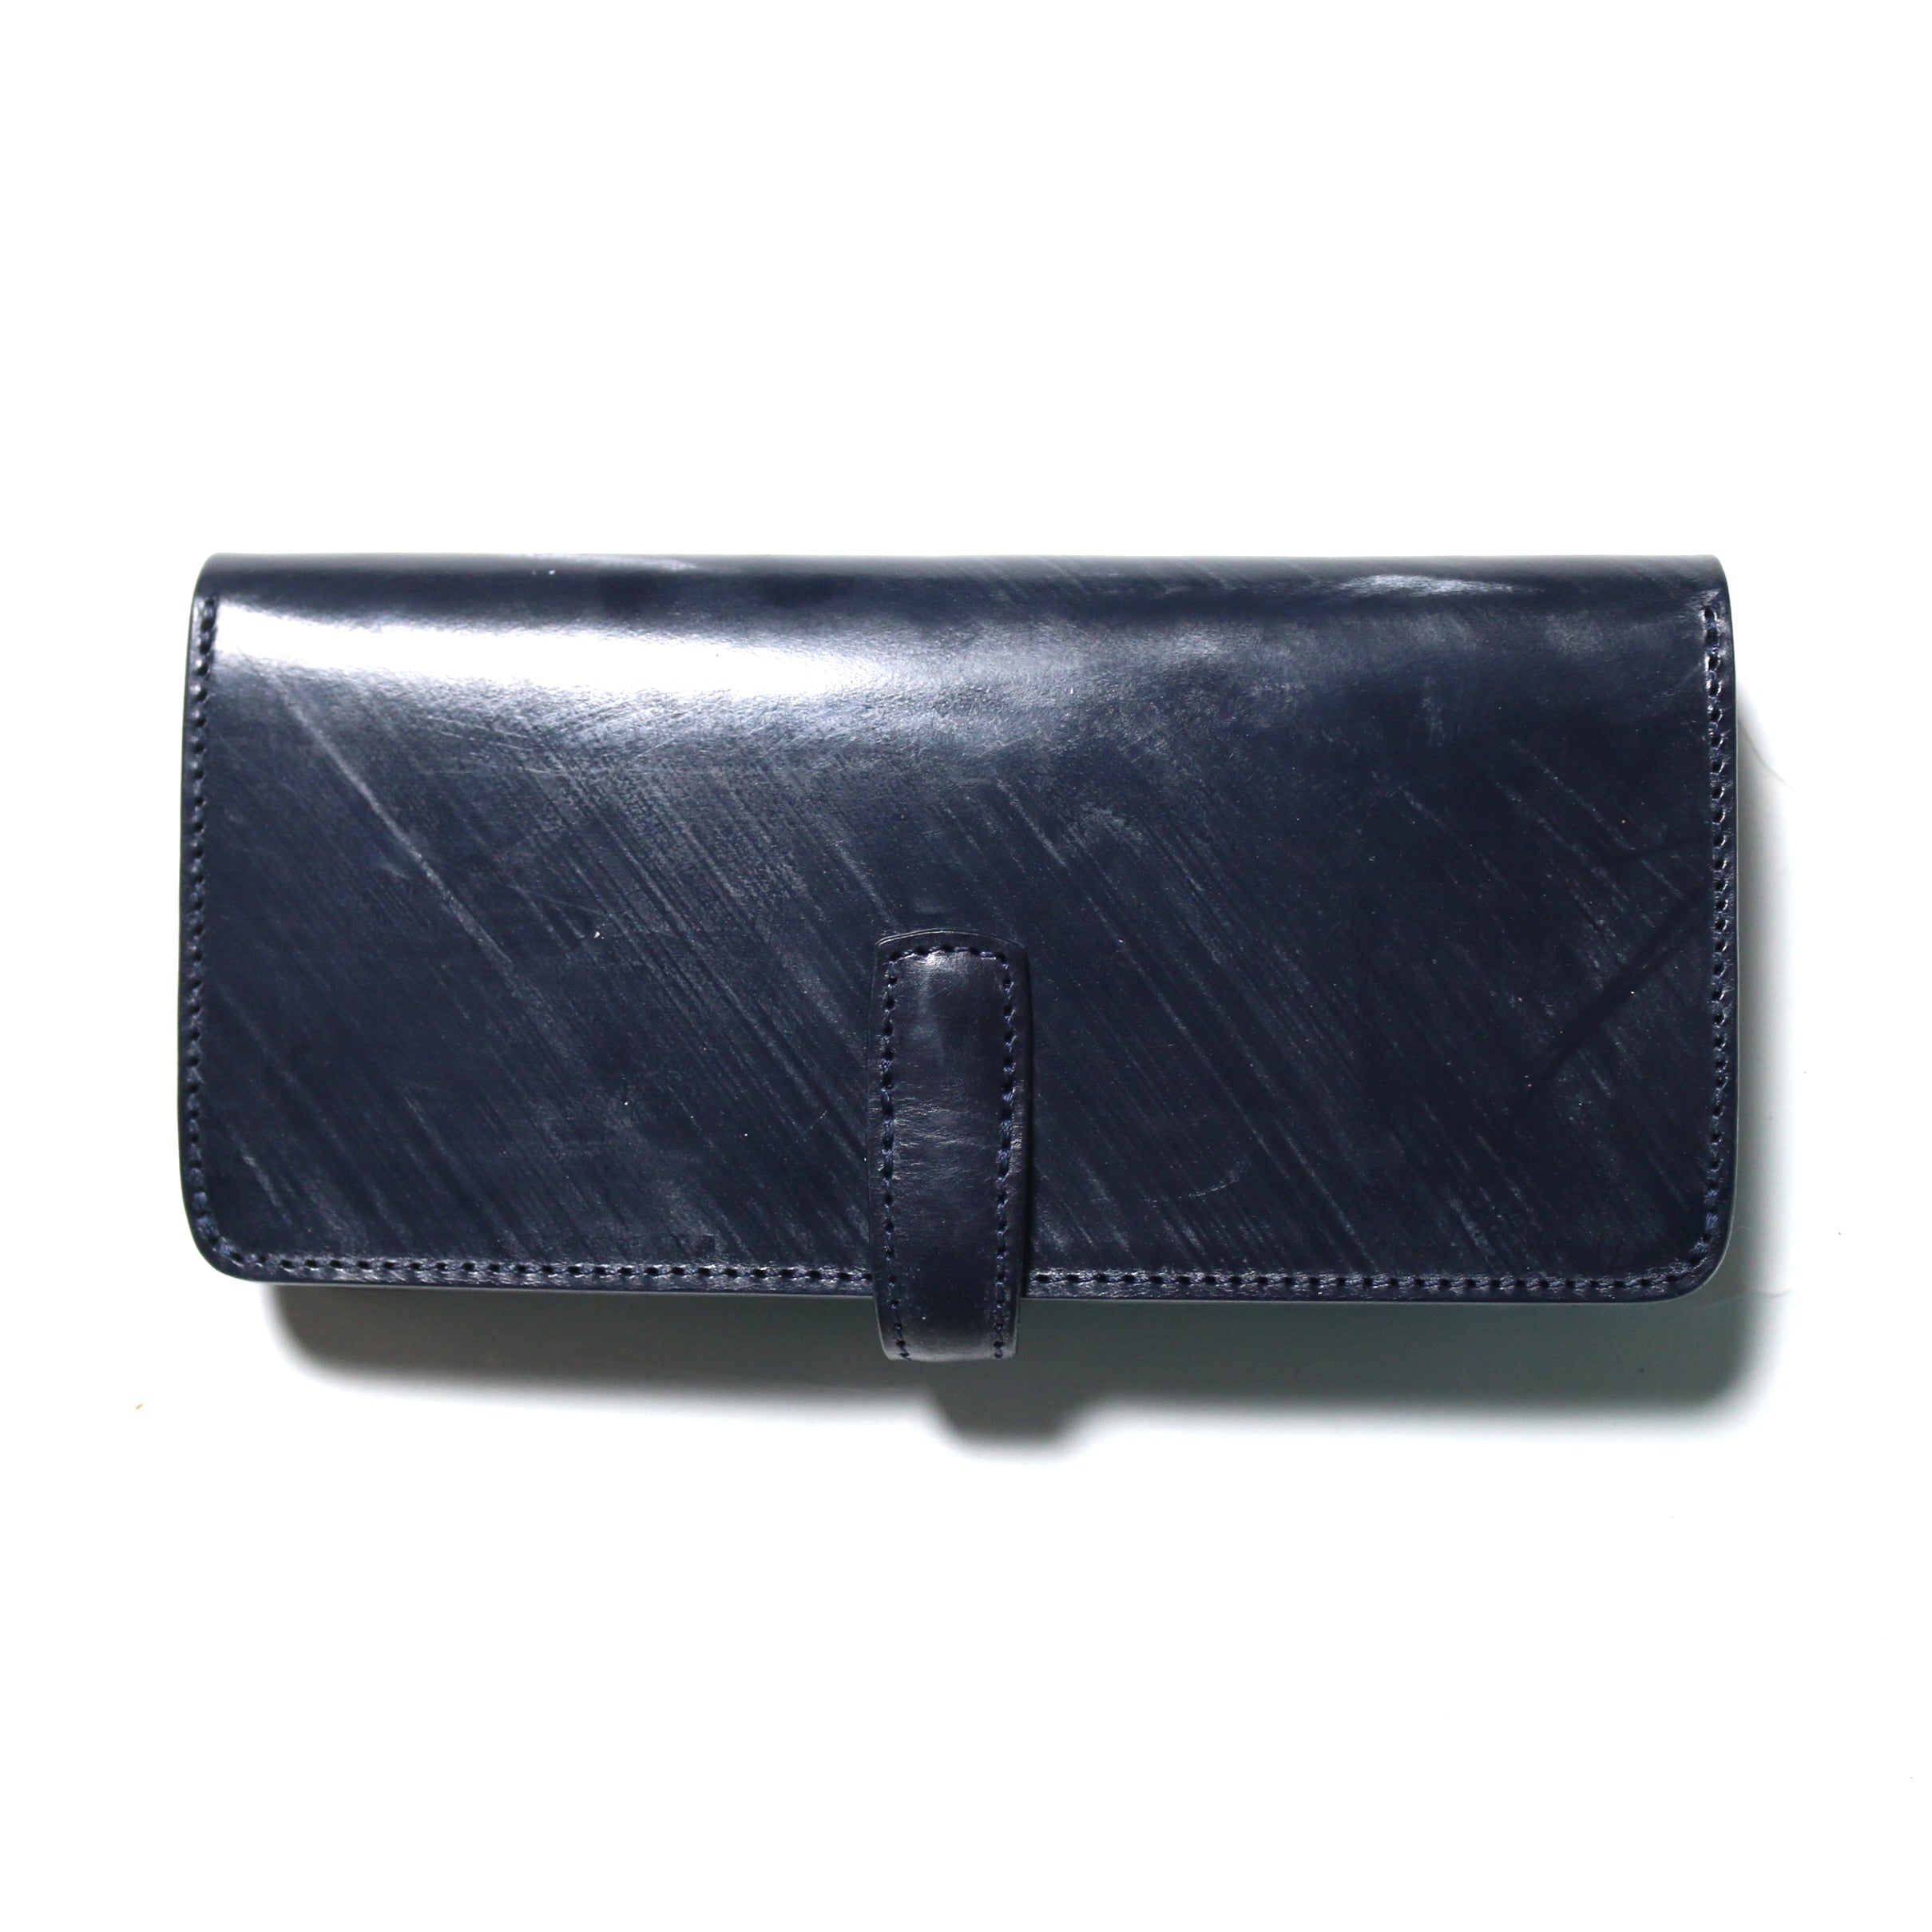 SL170 bridle leather long wallet